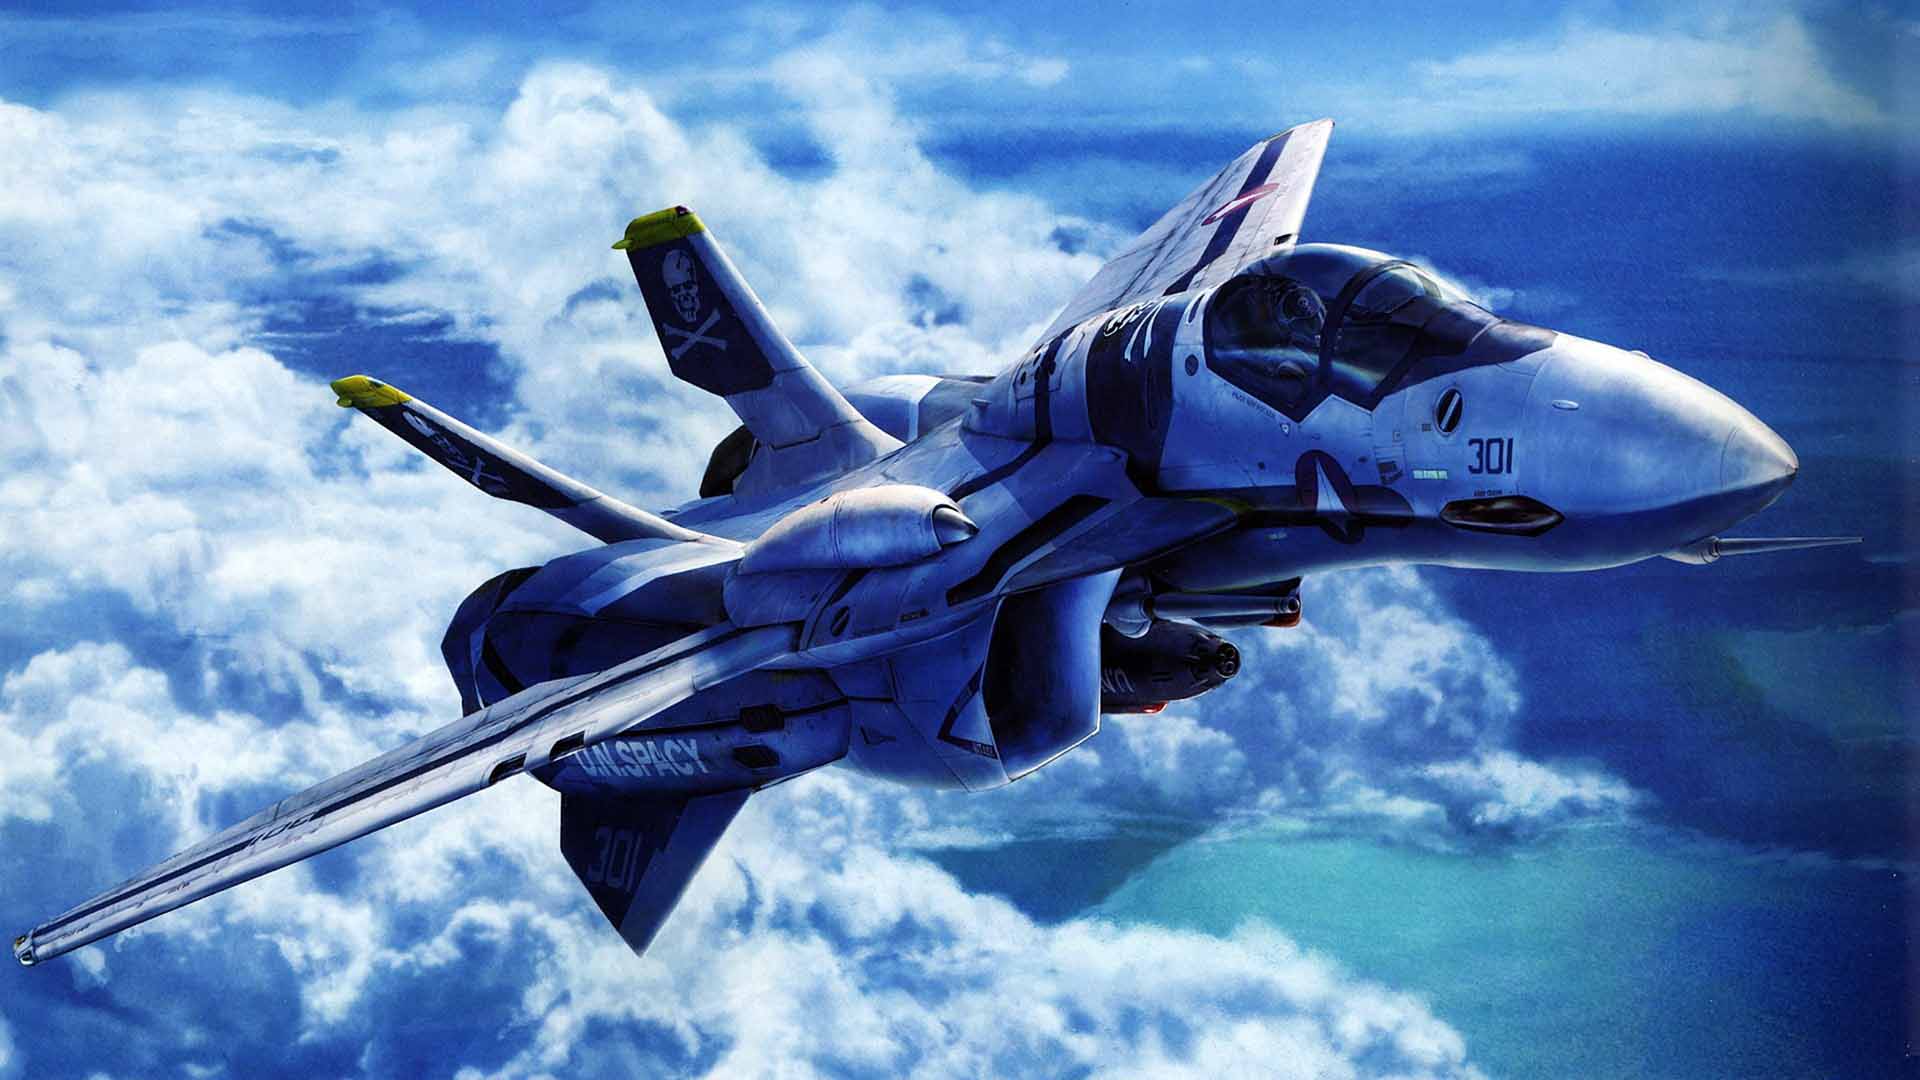 Fighter Jet wallpaper   837543 1920x1080